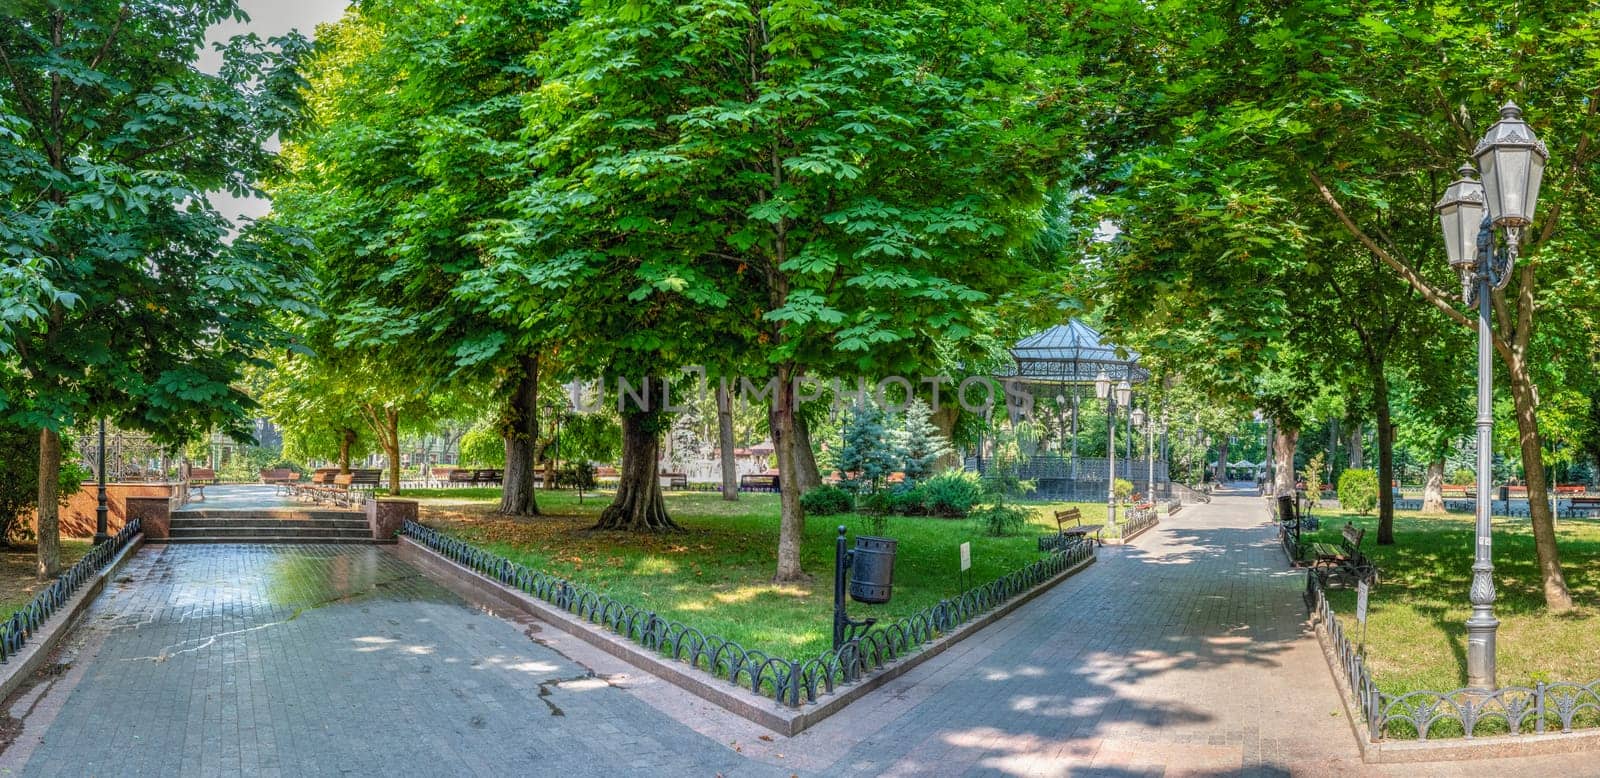 Alleys in the City Garden of Odessa, Ukraine by Multipedia